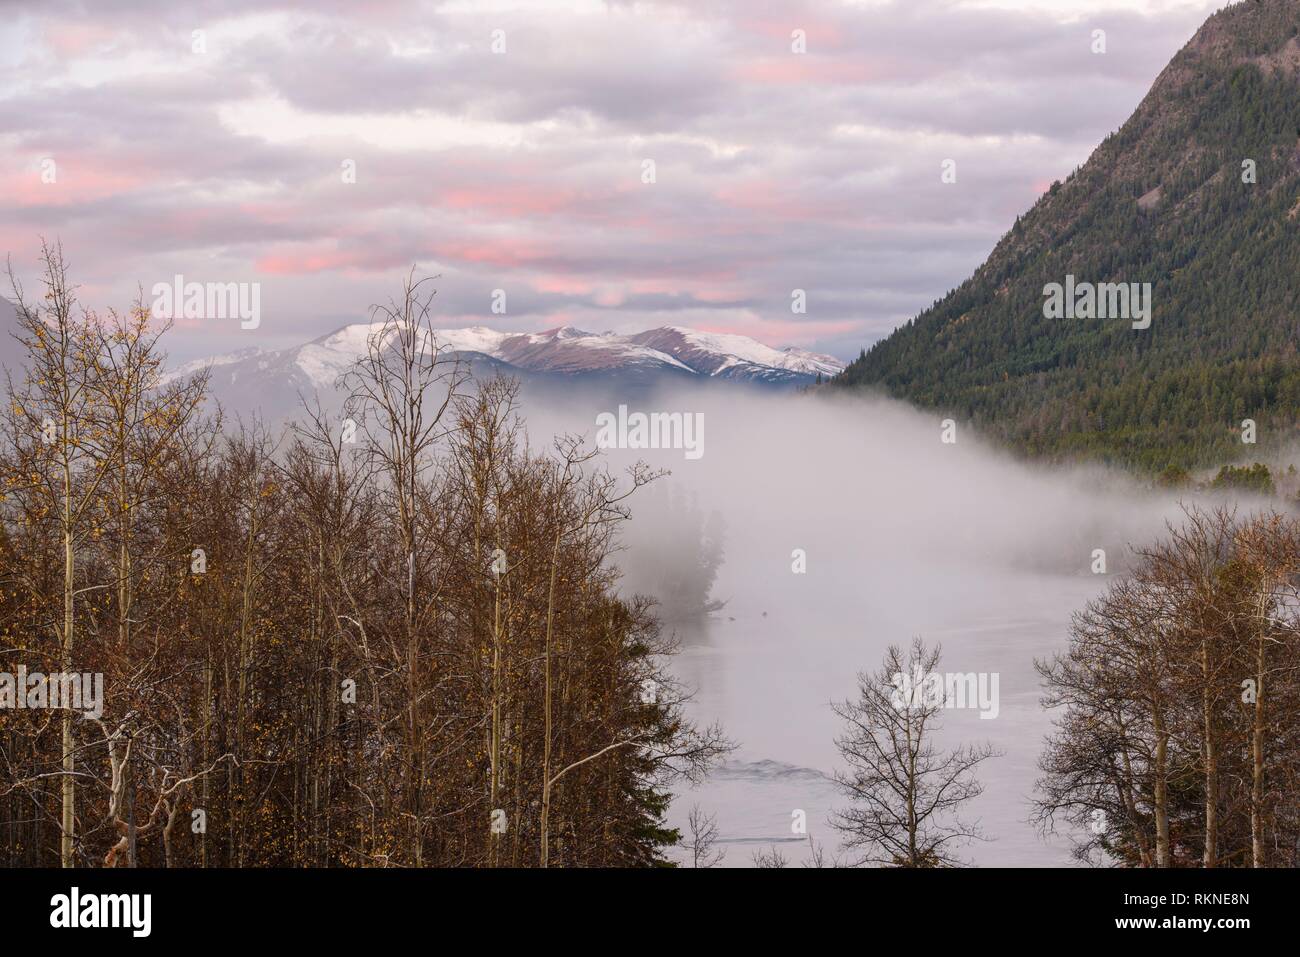 Dawn skies over the Chilko River, Chilcotin Wilderness, British Columbia, Canada. Stock Photo